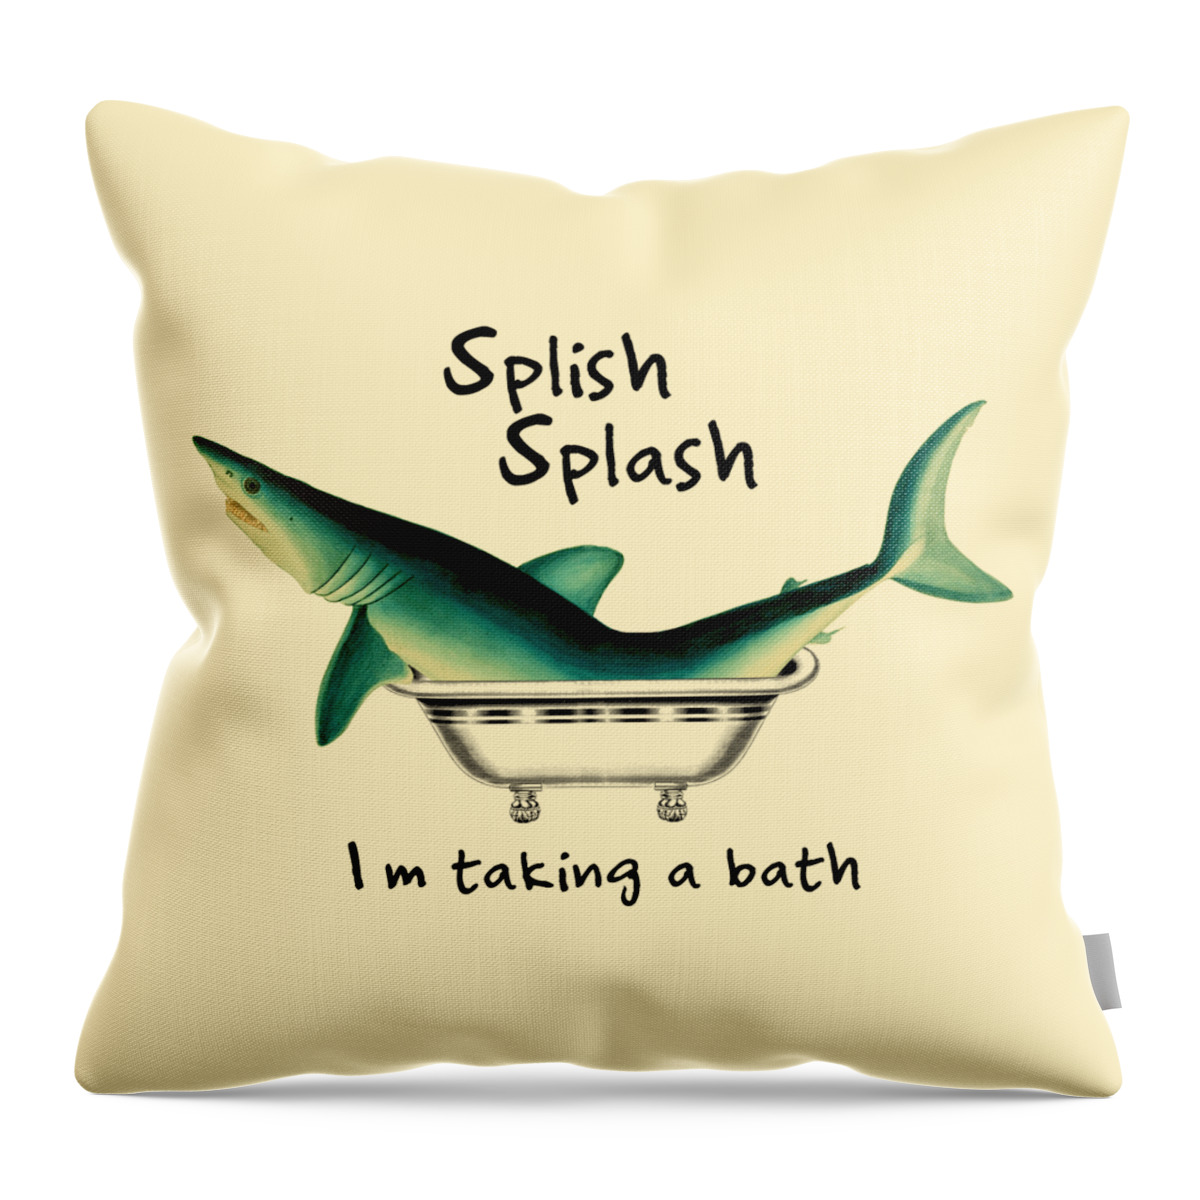 Shark Throw Pillow featuring the digital art Splish Splash Shark in Bathtub #1 by Madame Memento